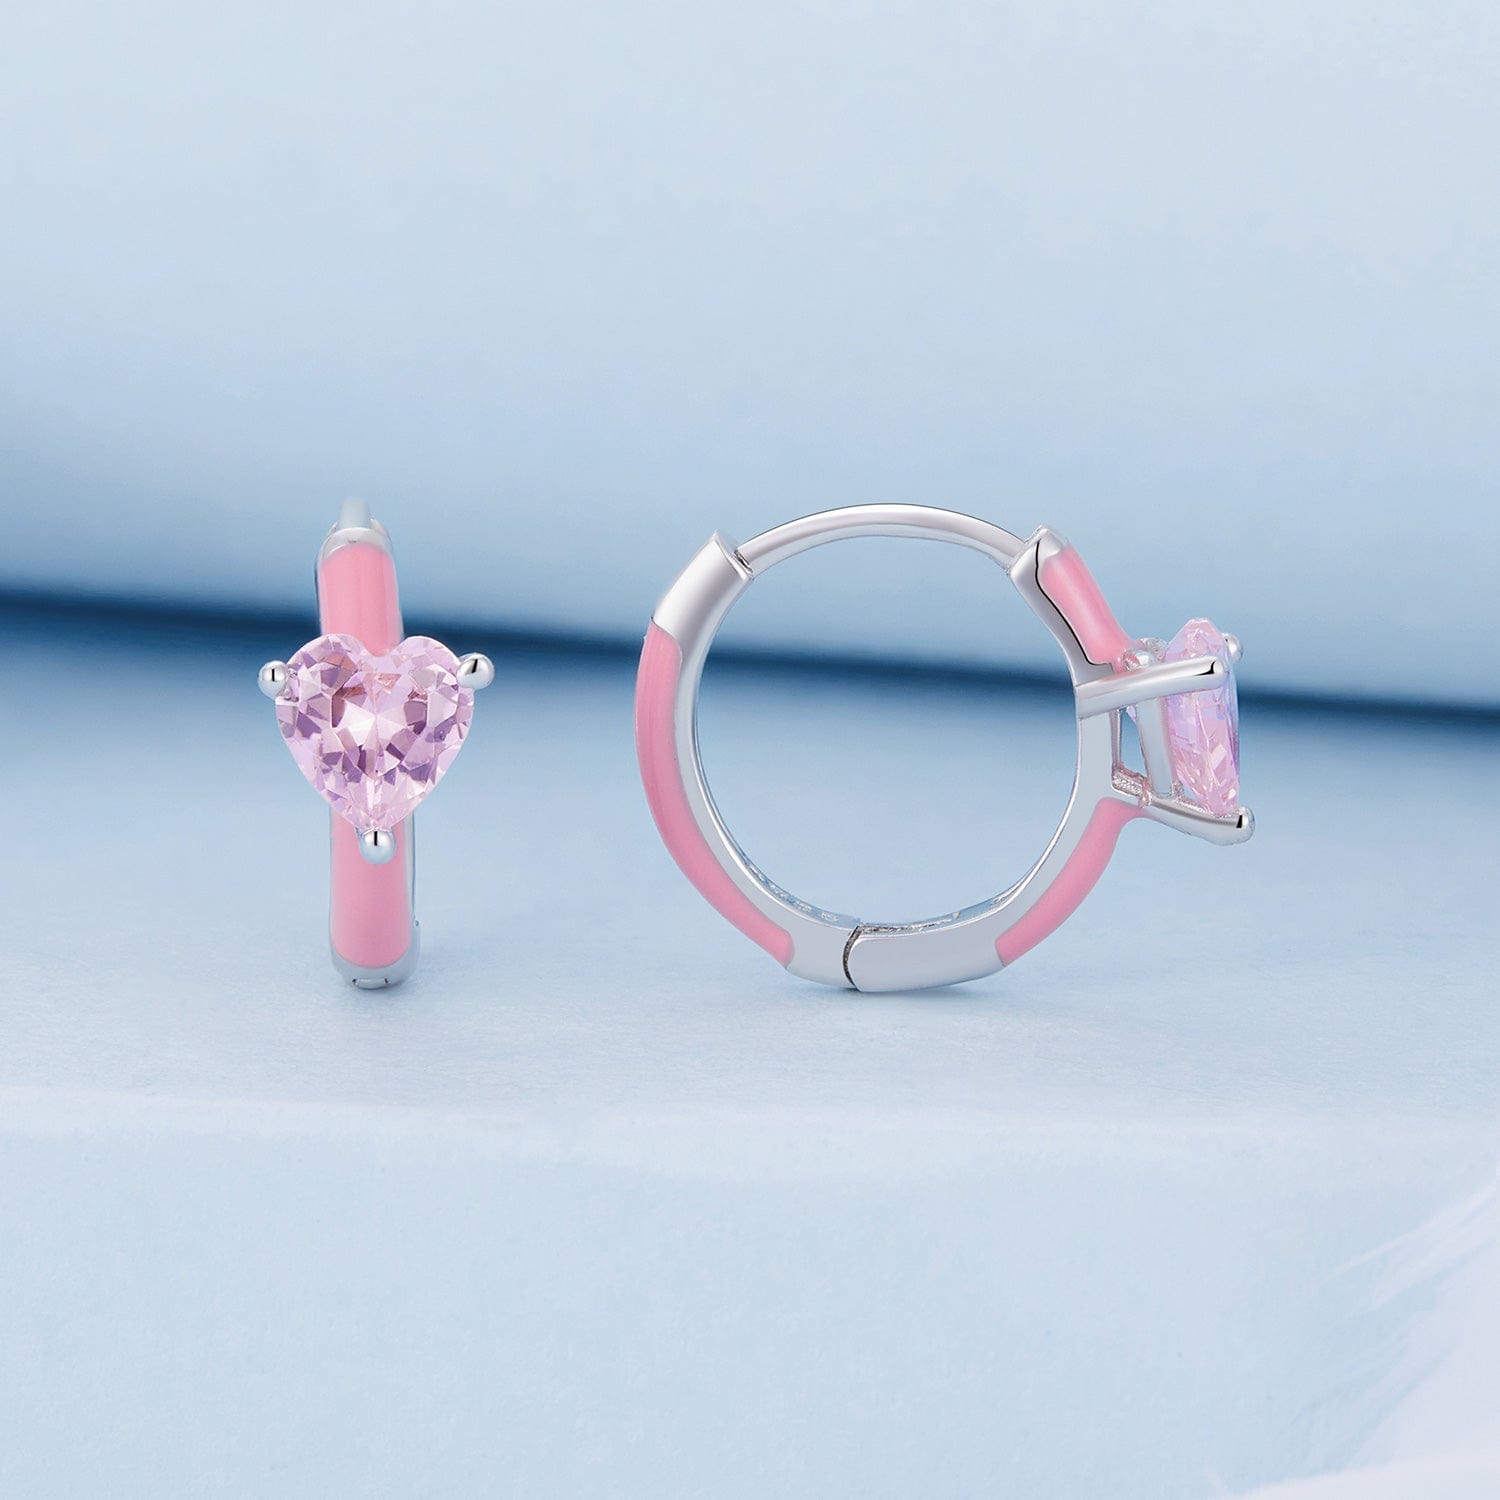 jewelaus Earrings Pink Heart Hoop Earrings